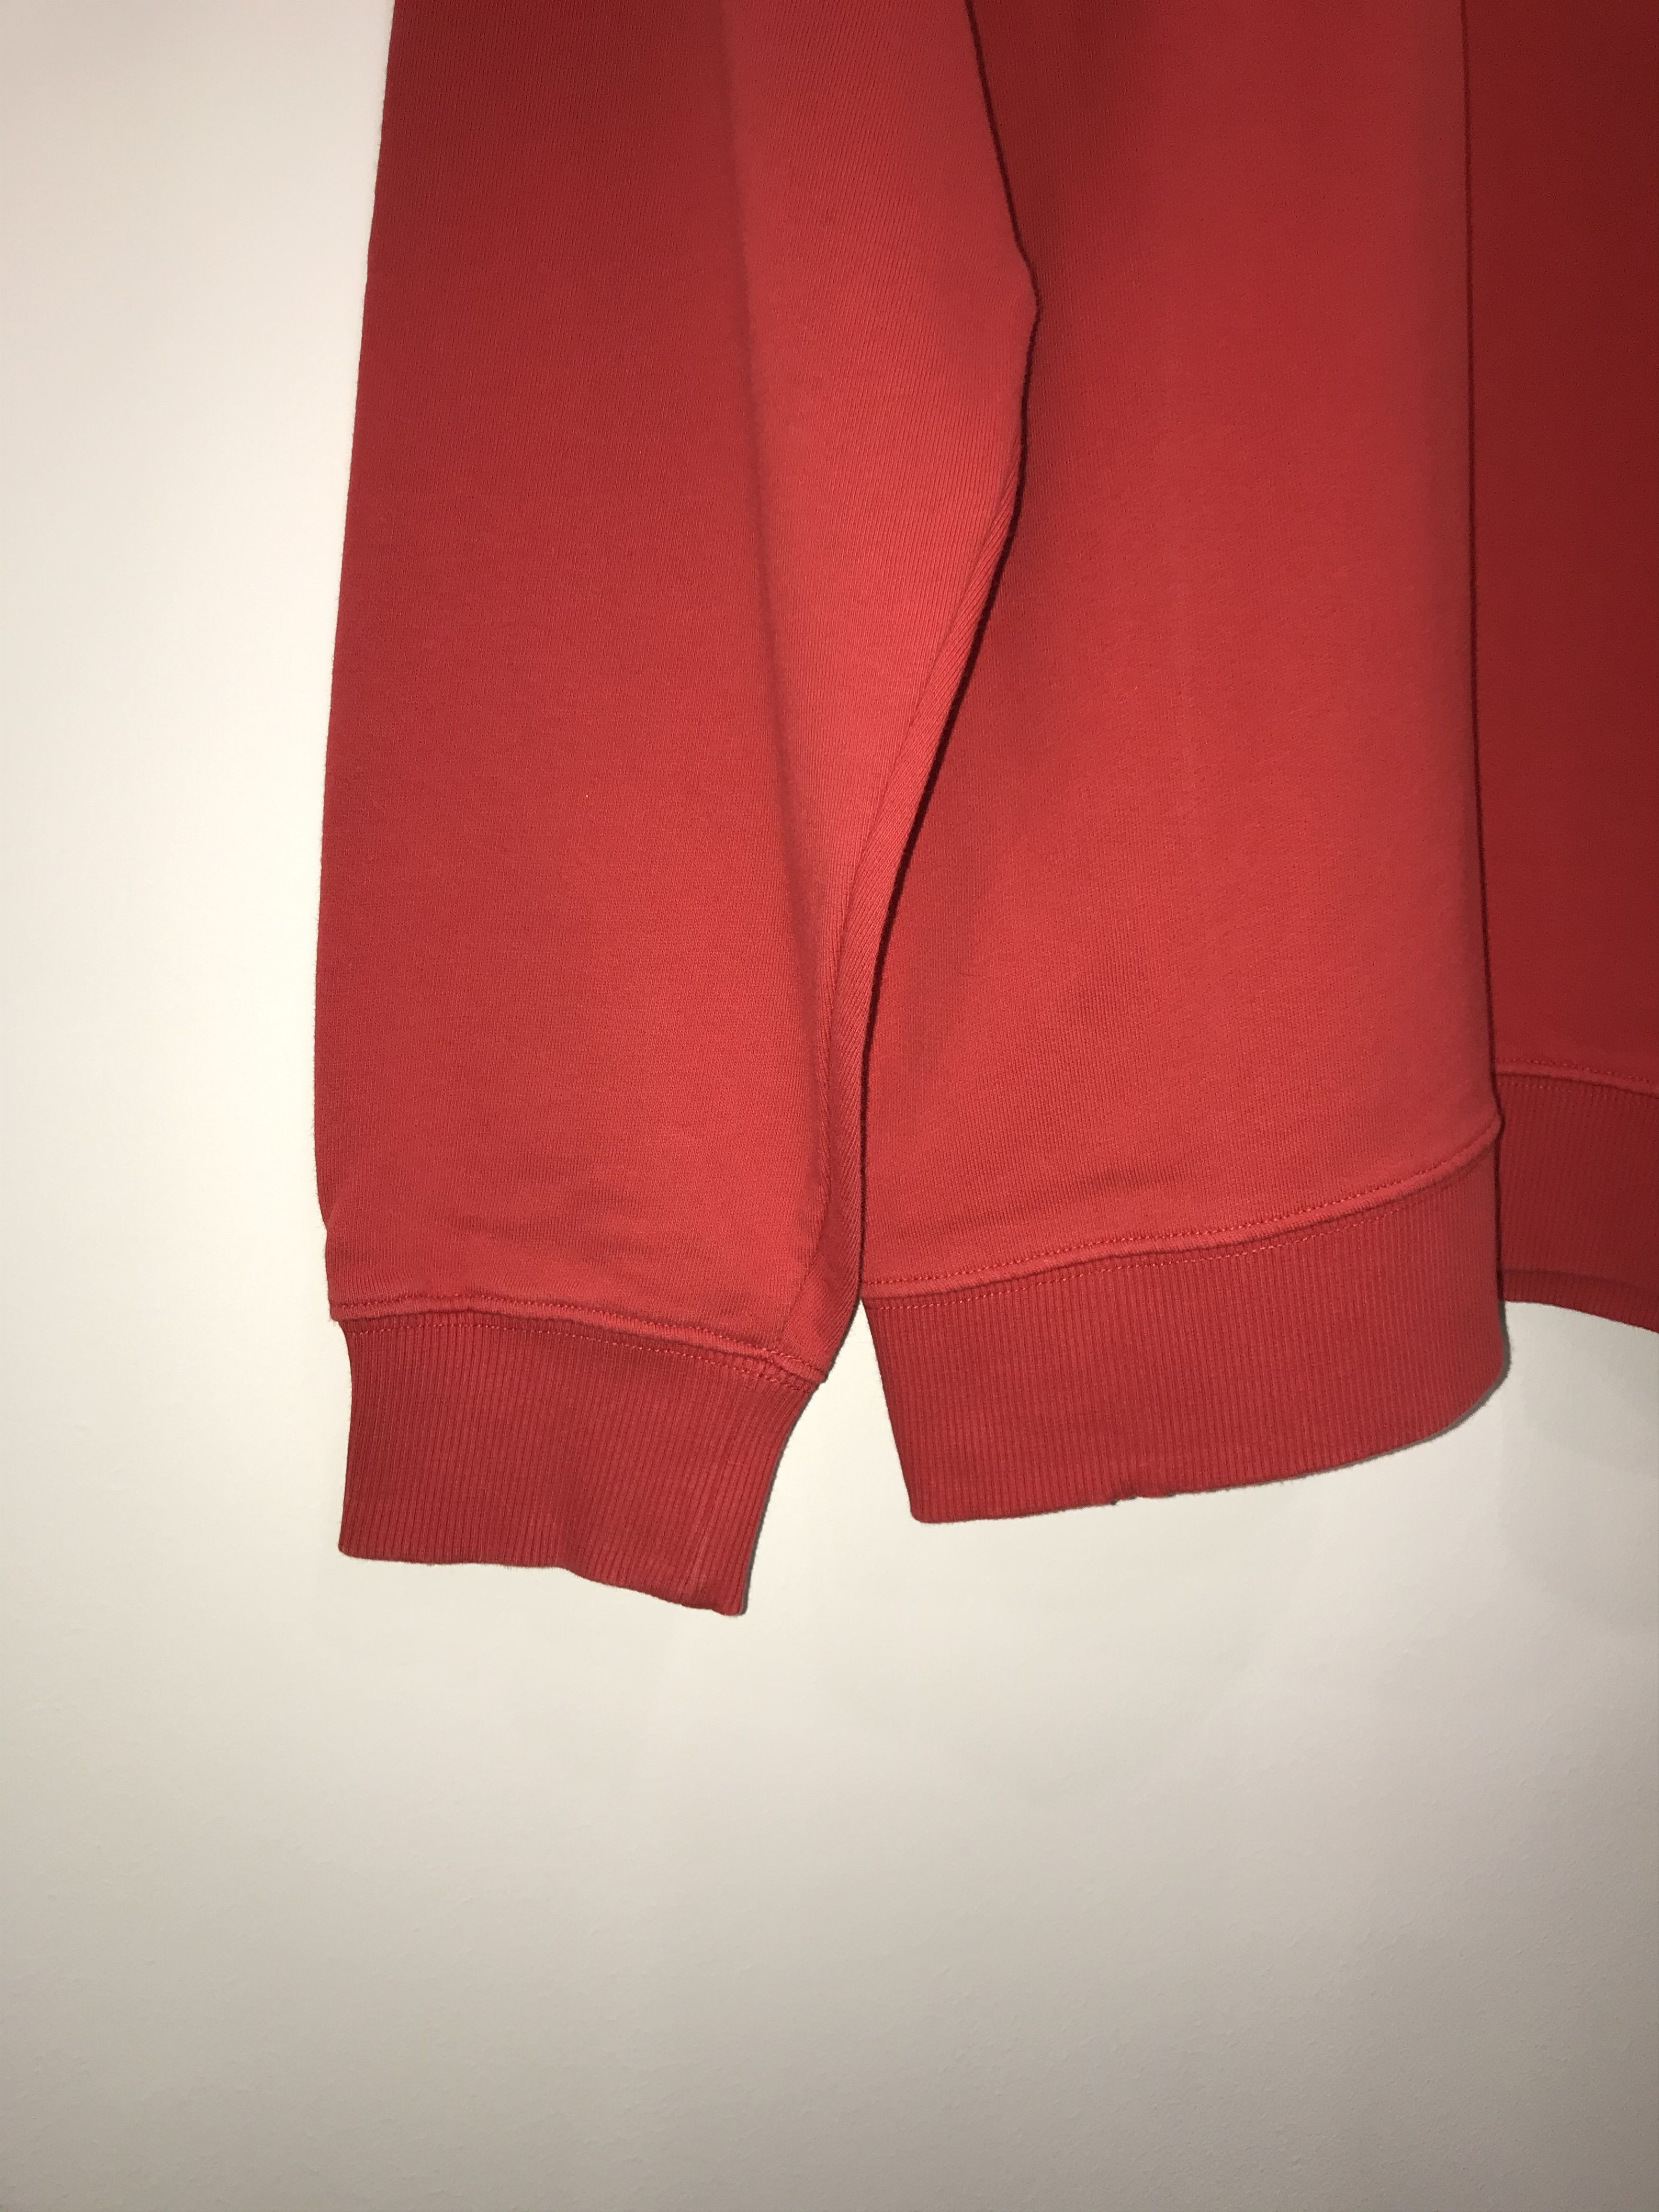 Adidas Vintage Adidas Red Sweatshirt Originals Equipment 00s Size US L / EU 52-54 / 3 - 5 Thumbnail